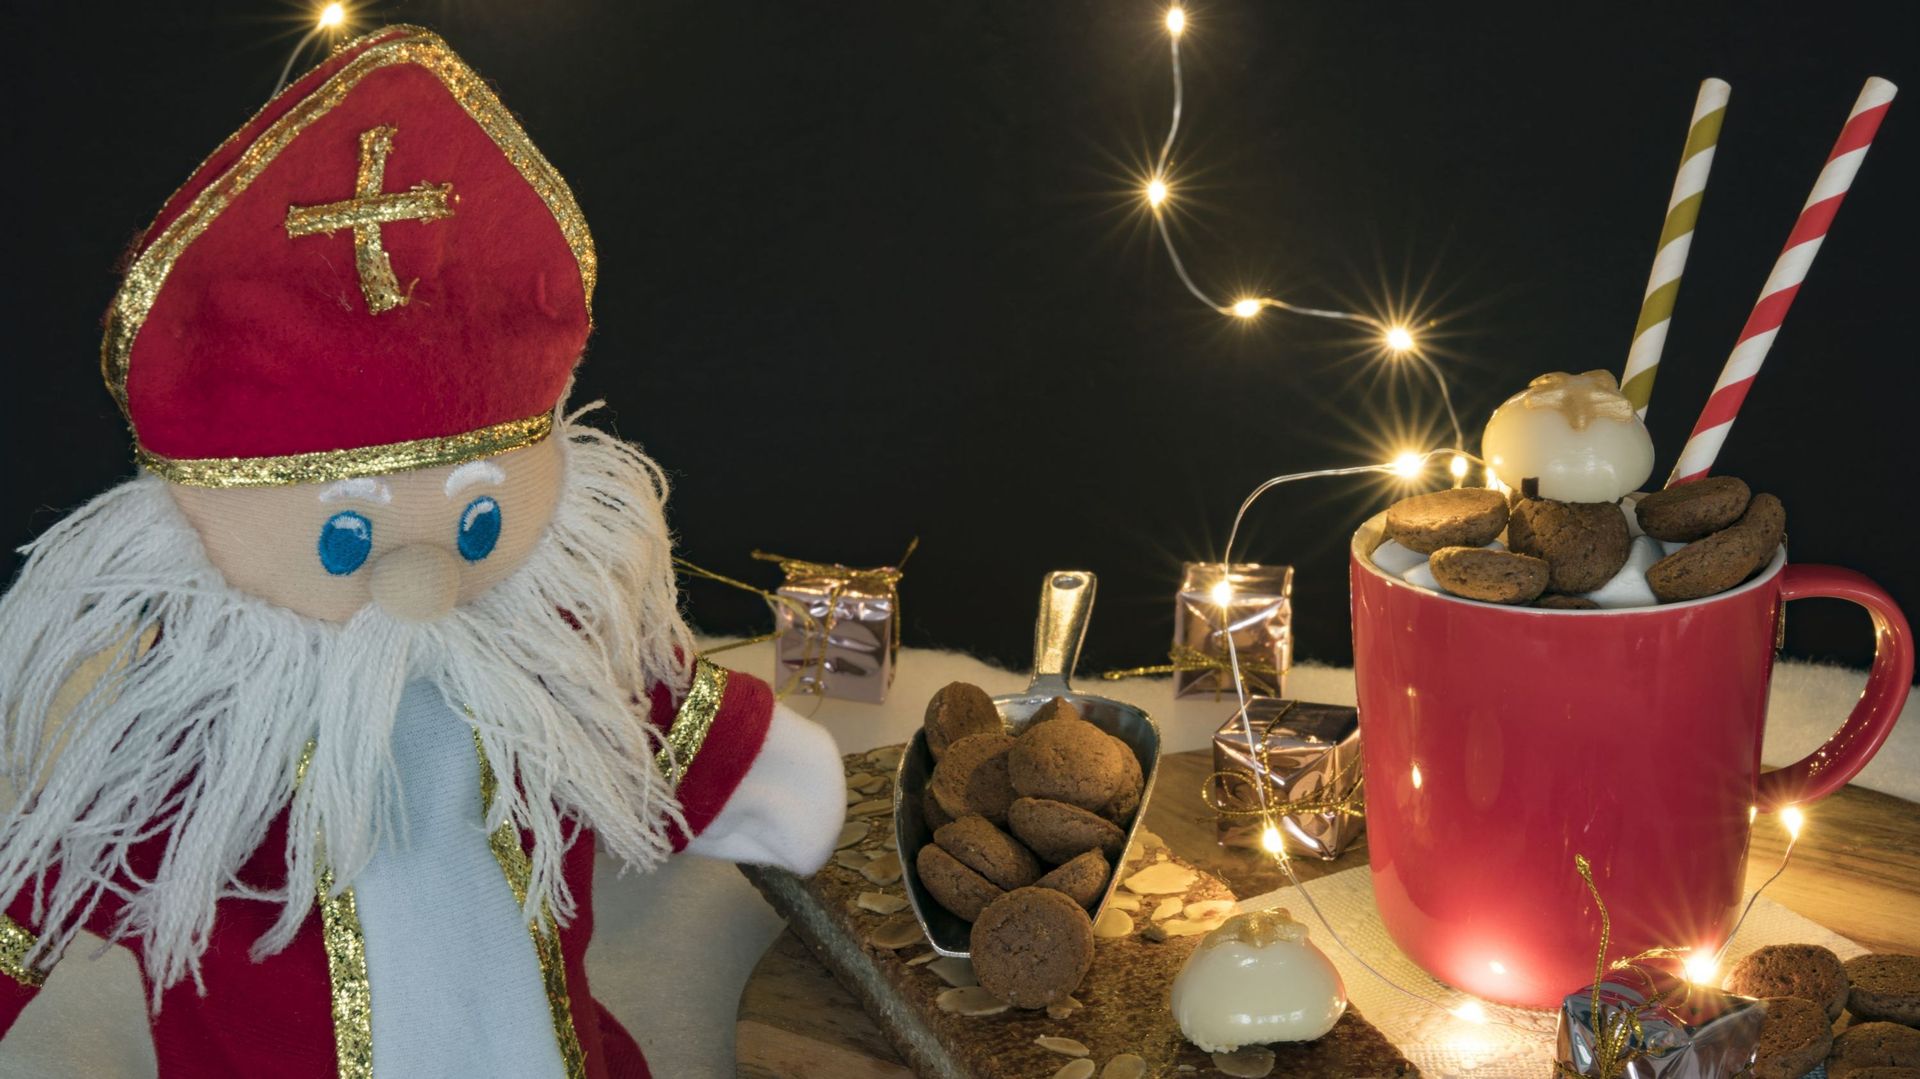 hot chocolate with marshmallows, kruidnoten, doll, for Dutch event Sinterklaas, against dark background